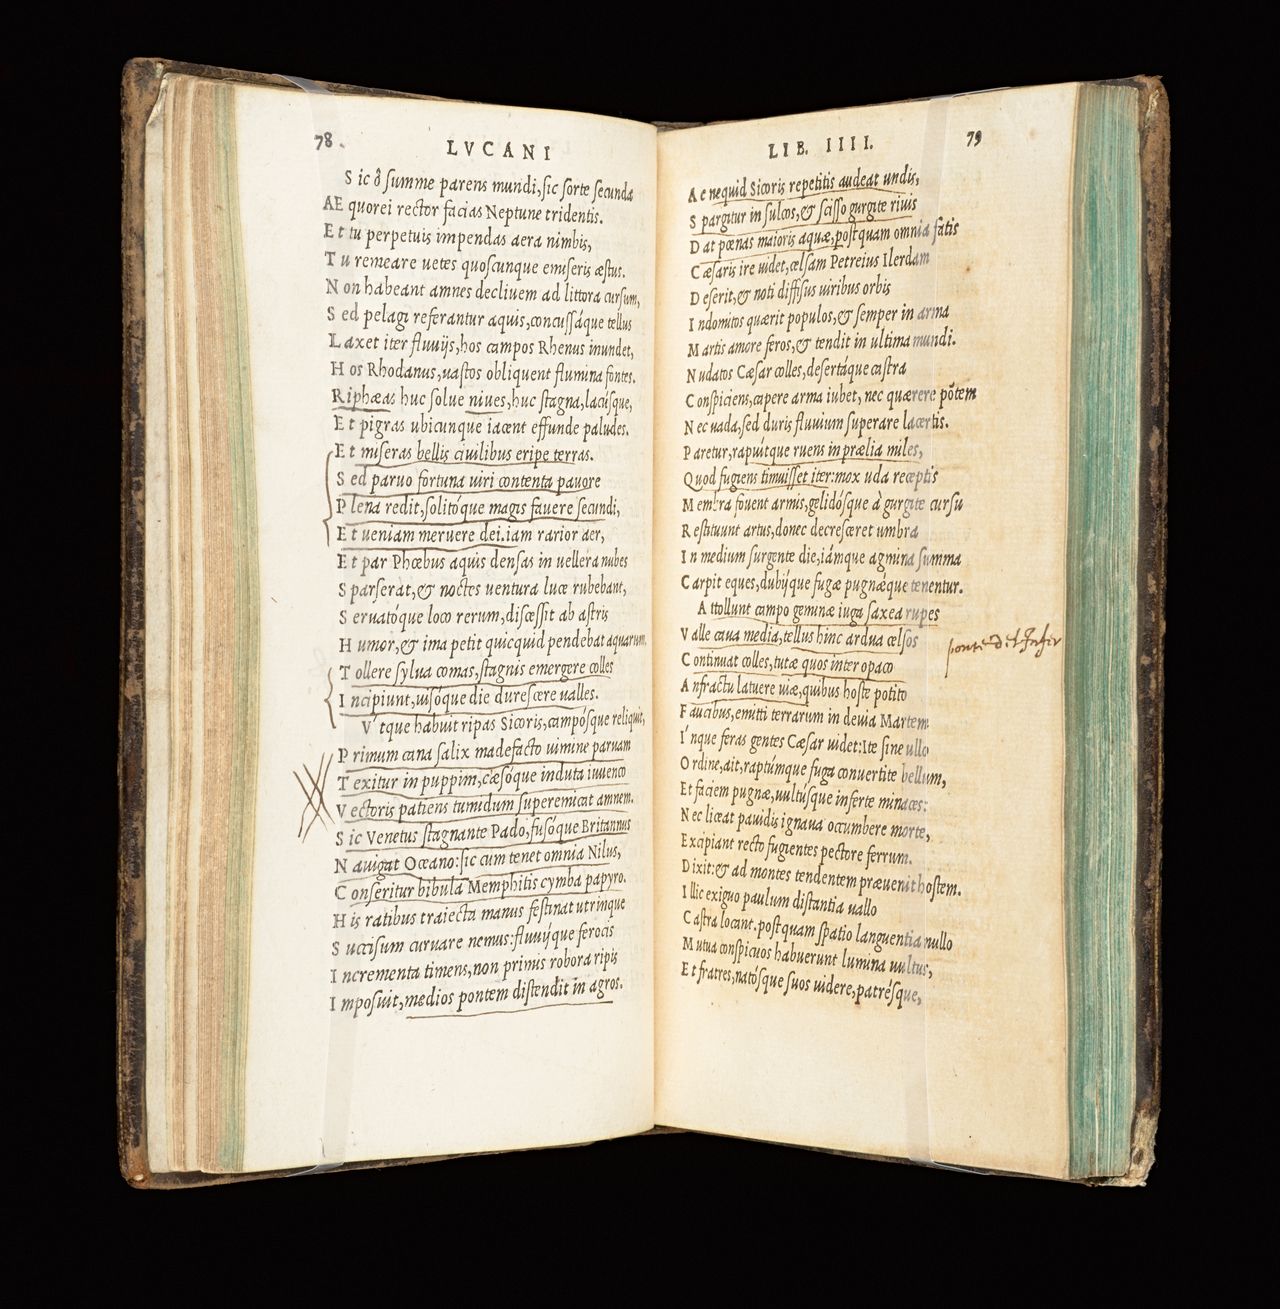 Lucan, <em>De bello ciuili libri decem...</em>, Paris, Robert Estienne, 1545, State Library Victoria, Melbourne (RAREEMM 113/1)